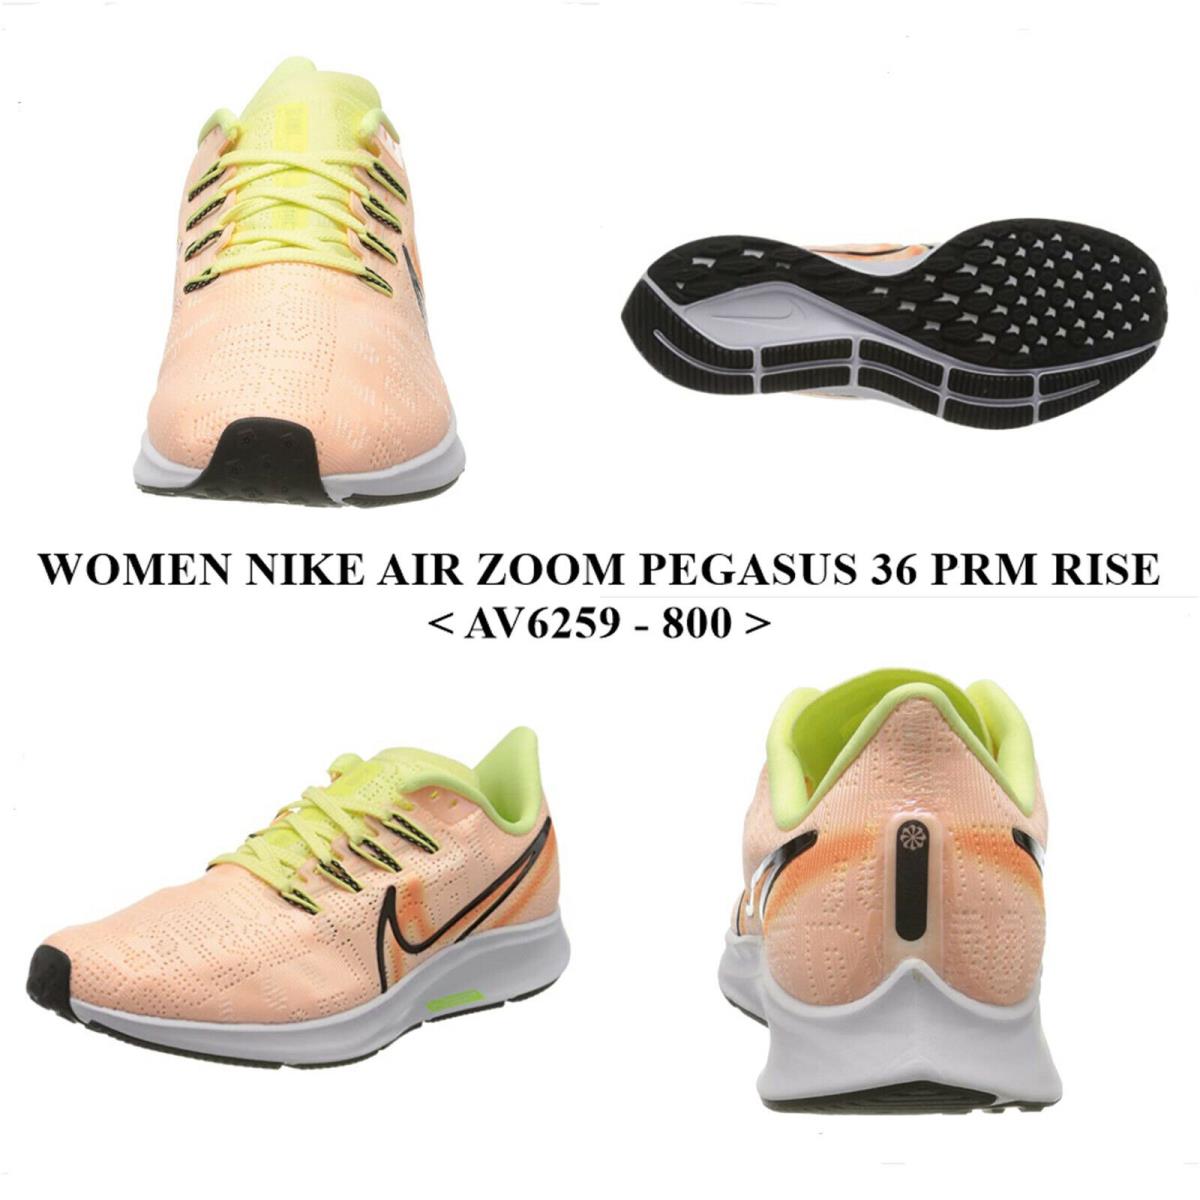 Women`s Nike Air Zoom Pegasus 36 Prm Rise AV6259 - 800 Running/casual Shoe`s